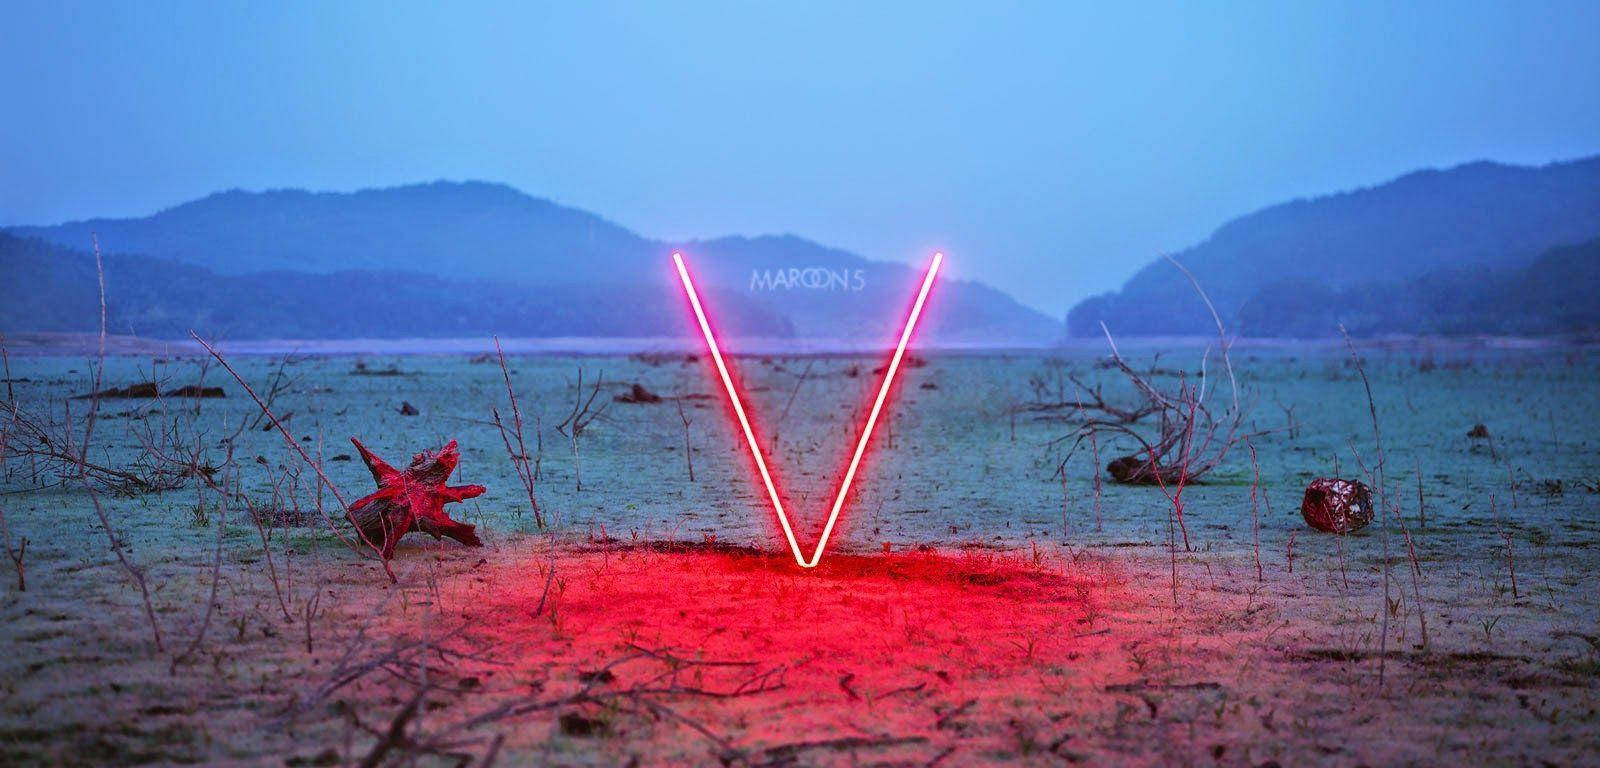 Caption: Maroon 5 V Album Cover Artwork Background